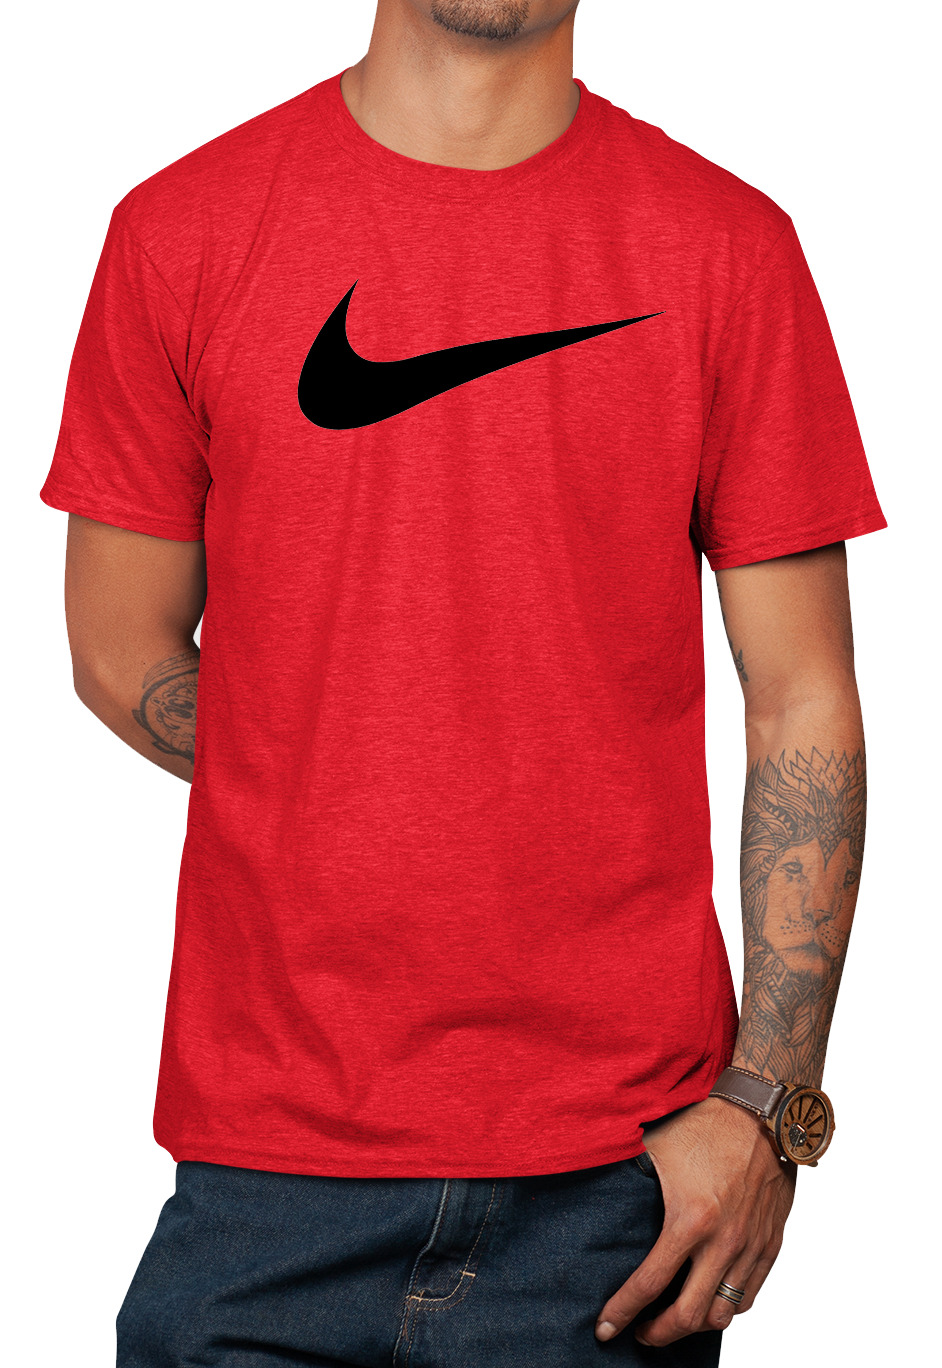 Nike Men's Short Sleeve Swoosh Logo Printed T-Shirt Gray Purple Blue White Red S